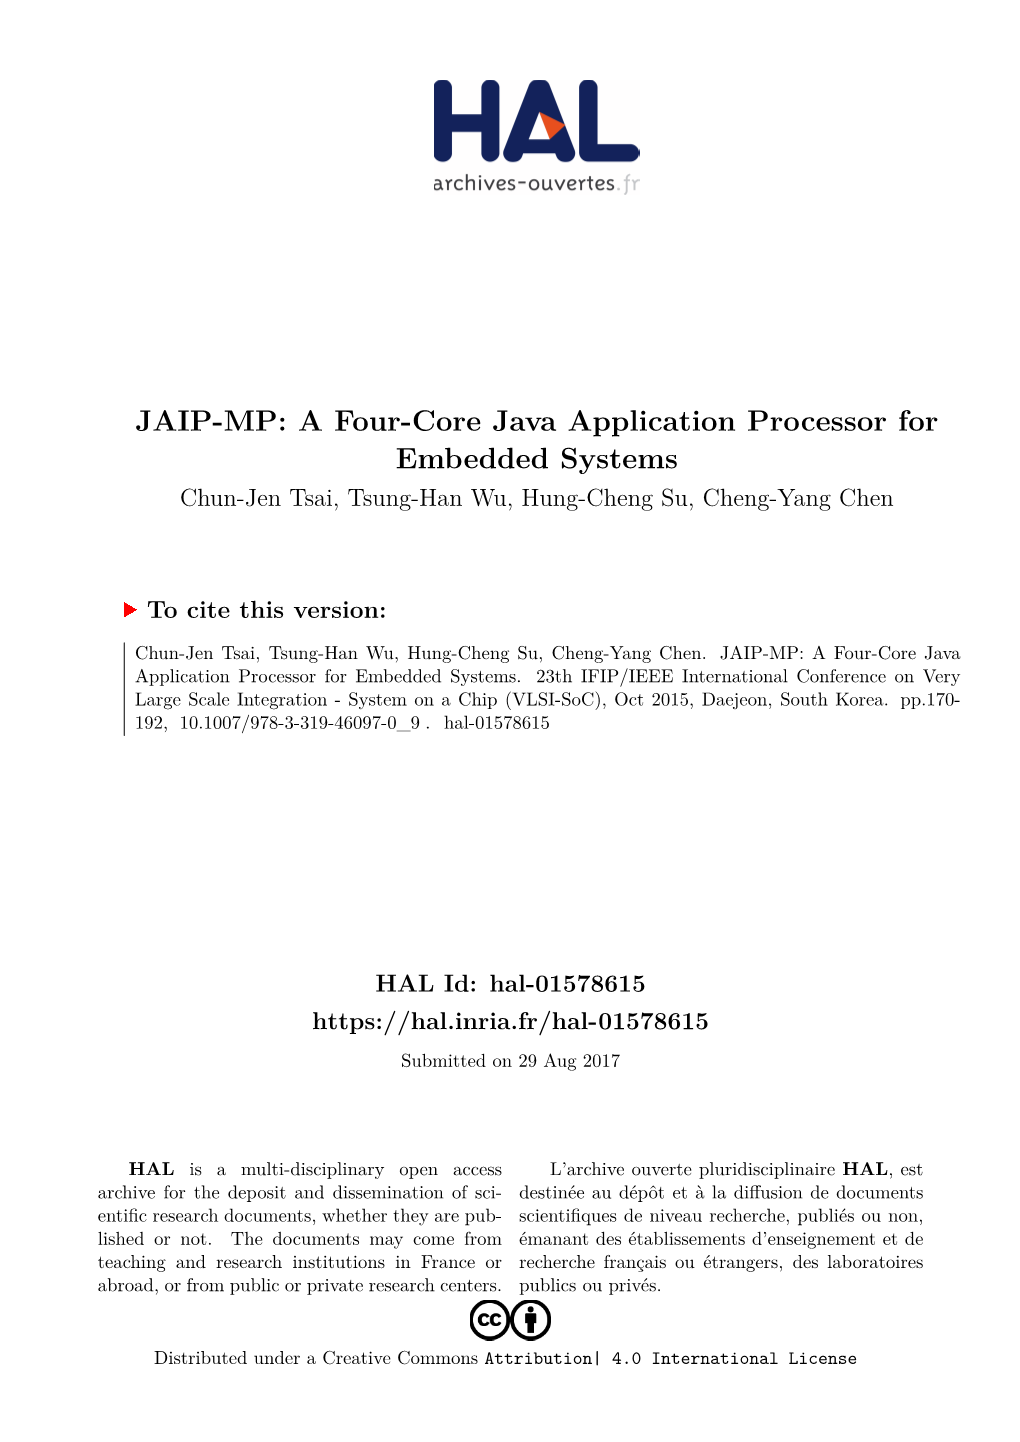 JAIP-MP: a Four-Core Java Application Processor for Embedded Systems Chun-Jen Tsai, Tsung-Han Wu, Hung-Cheng Su, Cheng-Yang Chen